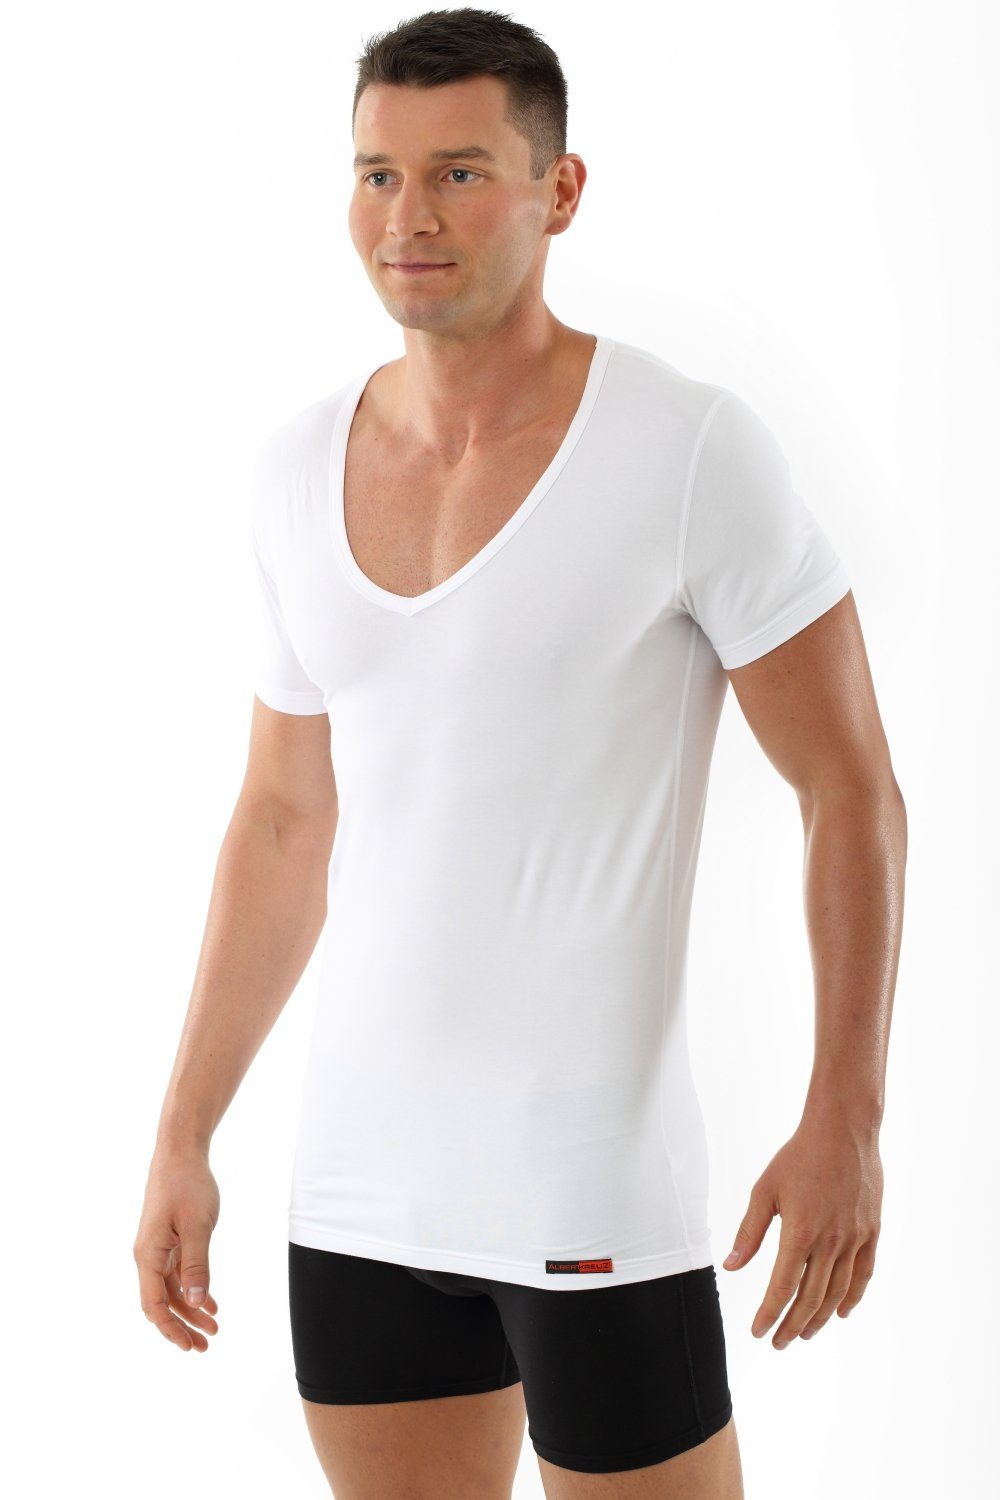 Albert Kreuz Unterhemd Deep-V atmungsaktiv Kurzarm (kein Set, kein Set) | Unterhemden